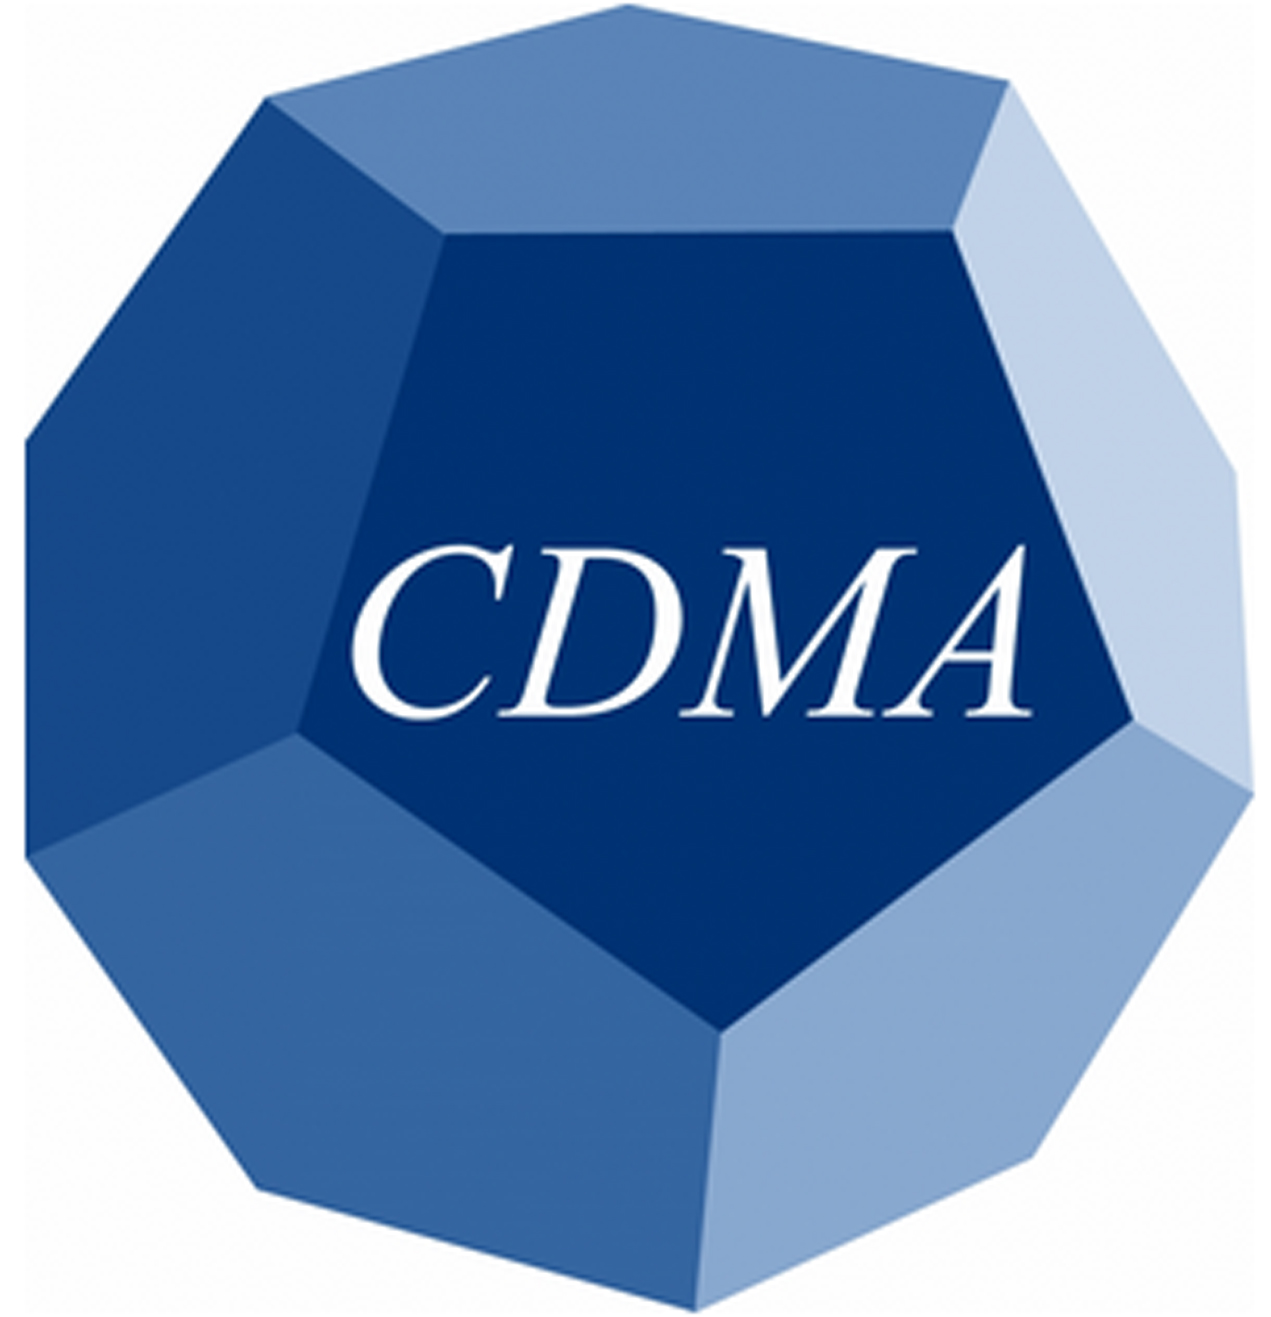 CDMA logo.jpg